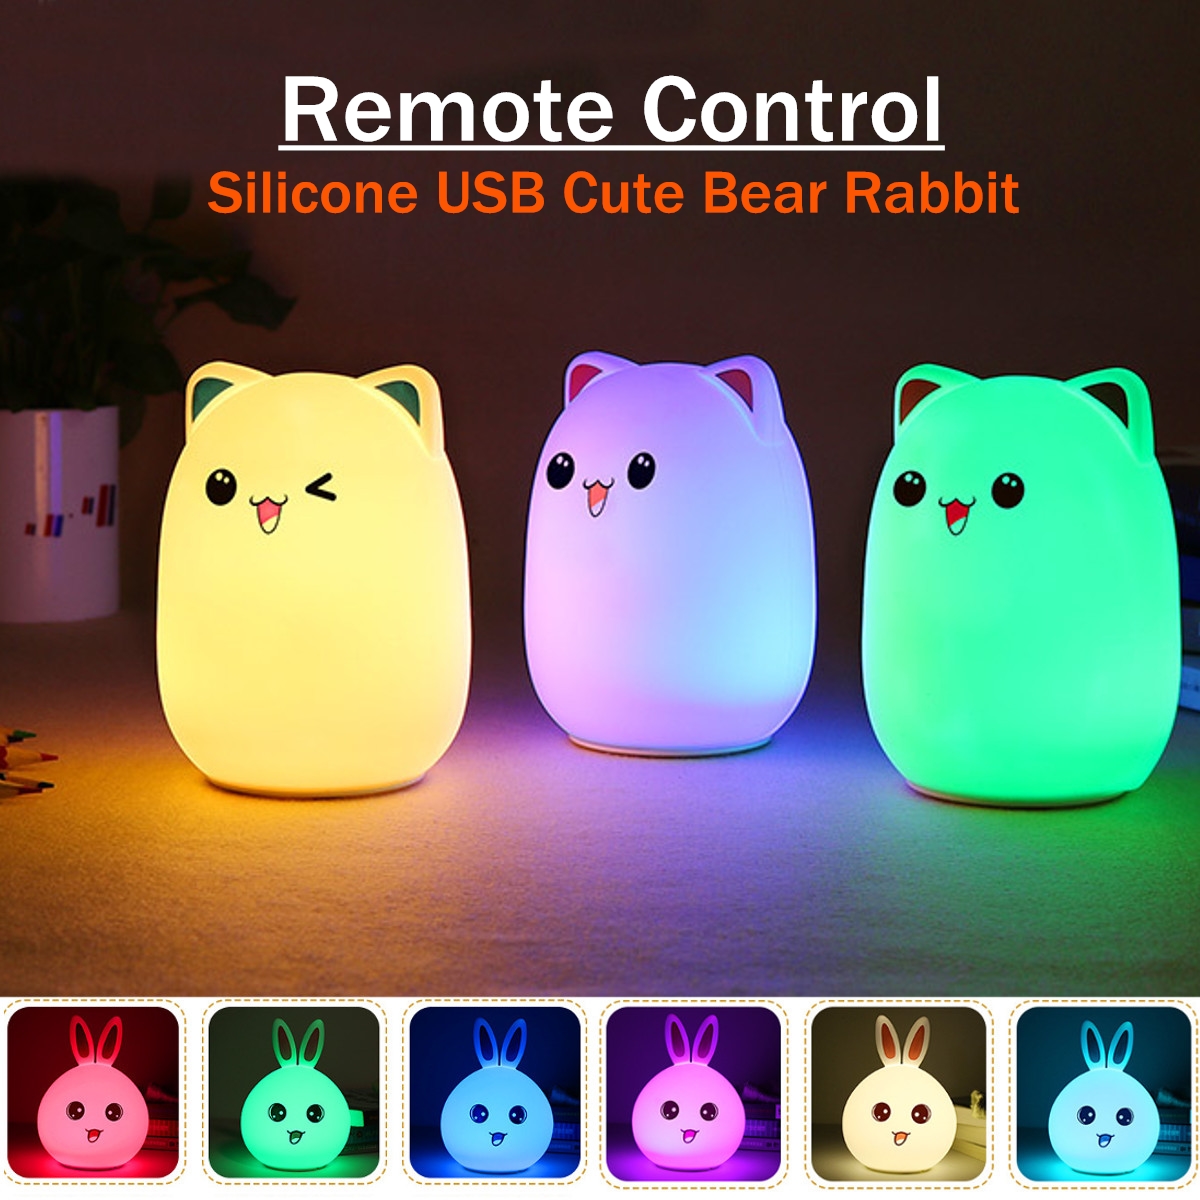 Remote control bear night light plug-in night light for children's bedroom new 